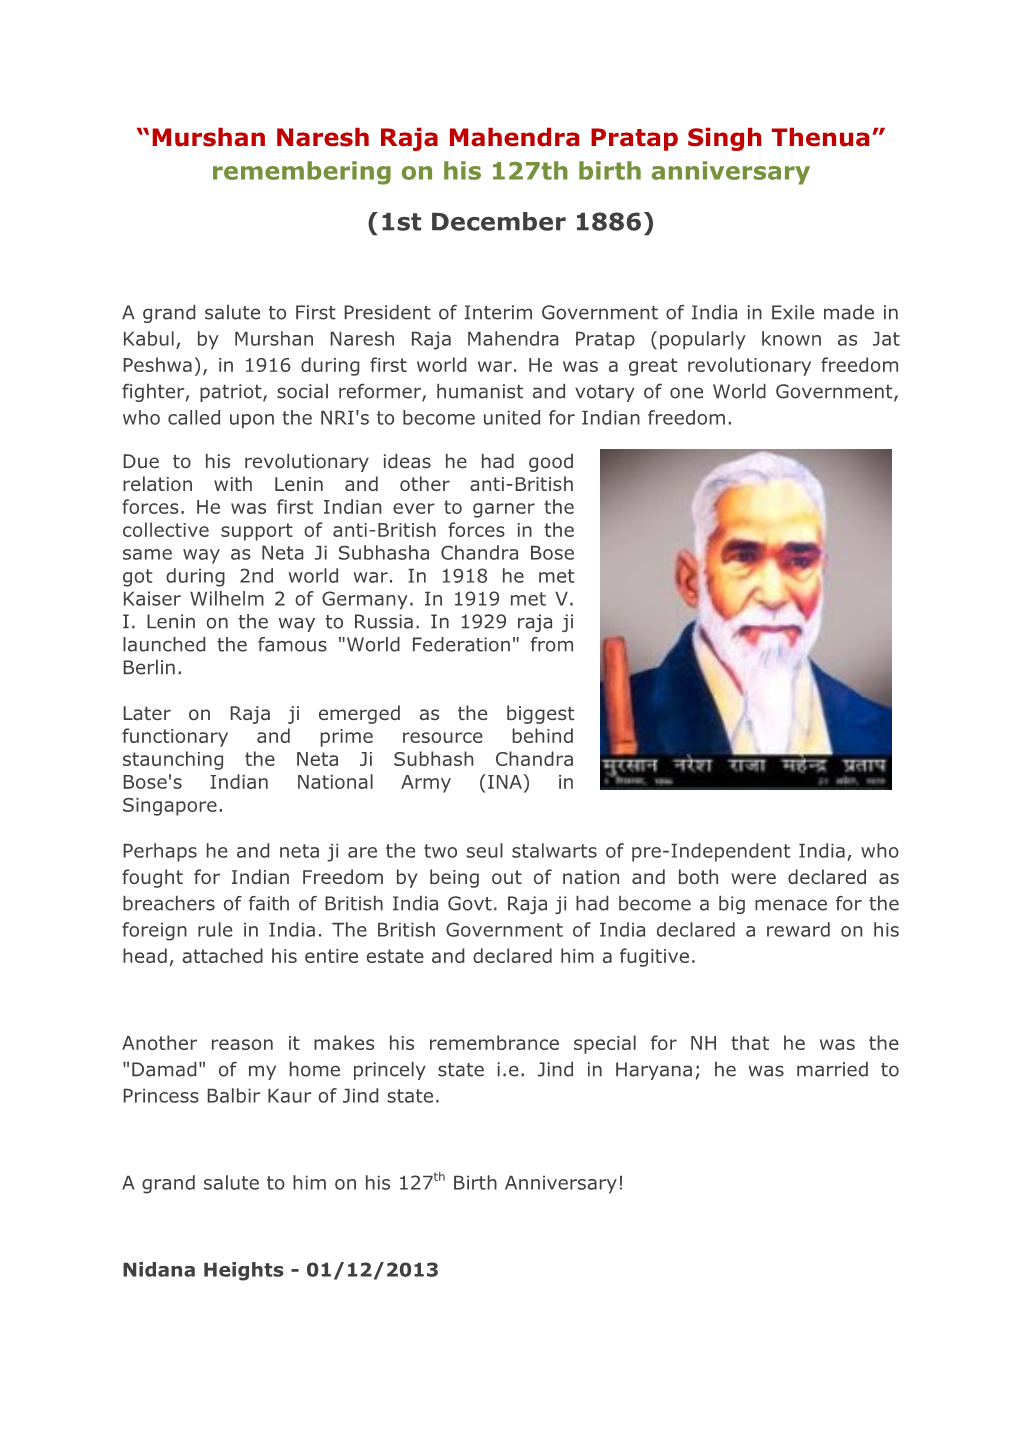 Murshan Naresh Raja Mahendra Pratap Singh Thenua” Remembering on His 127Th Birth Anniversary